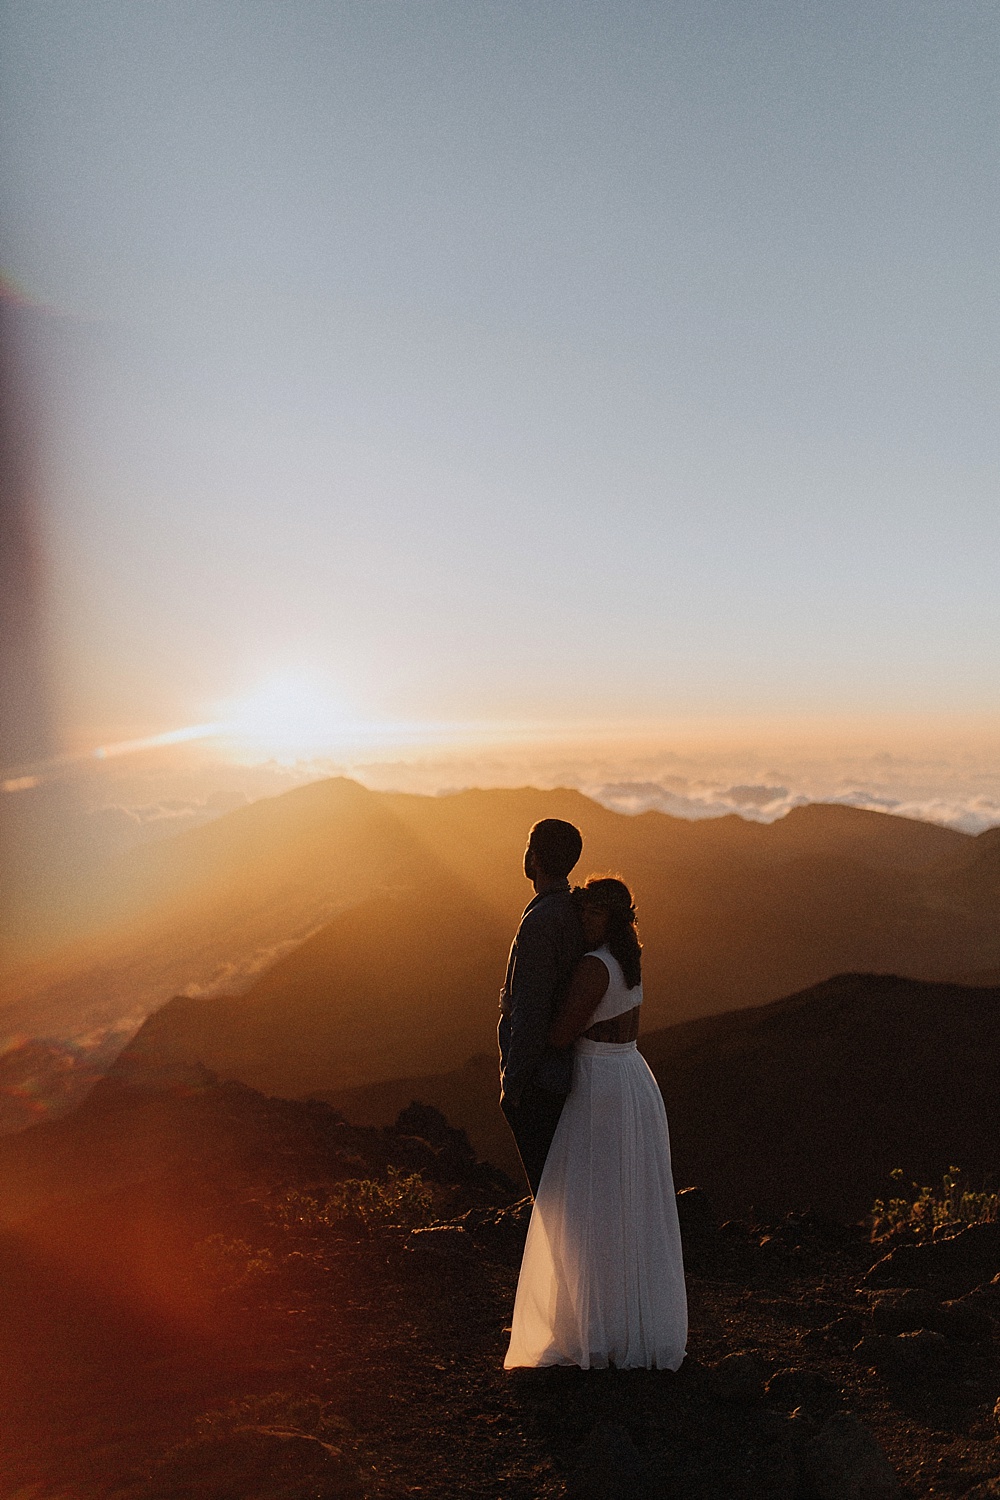 Halekala sunrise elopement with Maile and Joe at the summit in Maui, Hawaii. 